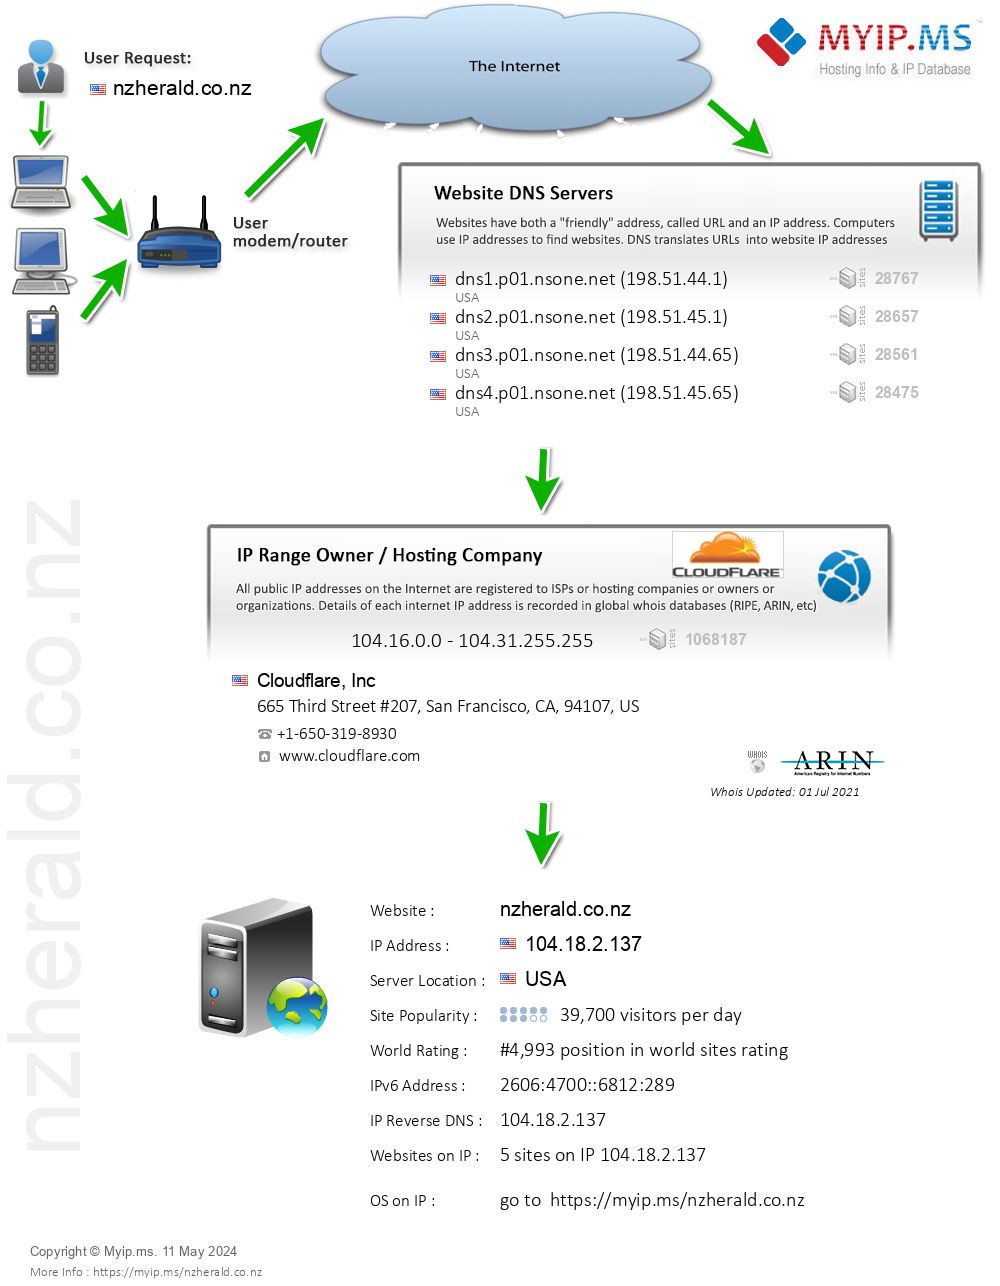 Nzherald.co.nz - Website Hosting Visual IP Diagram